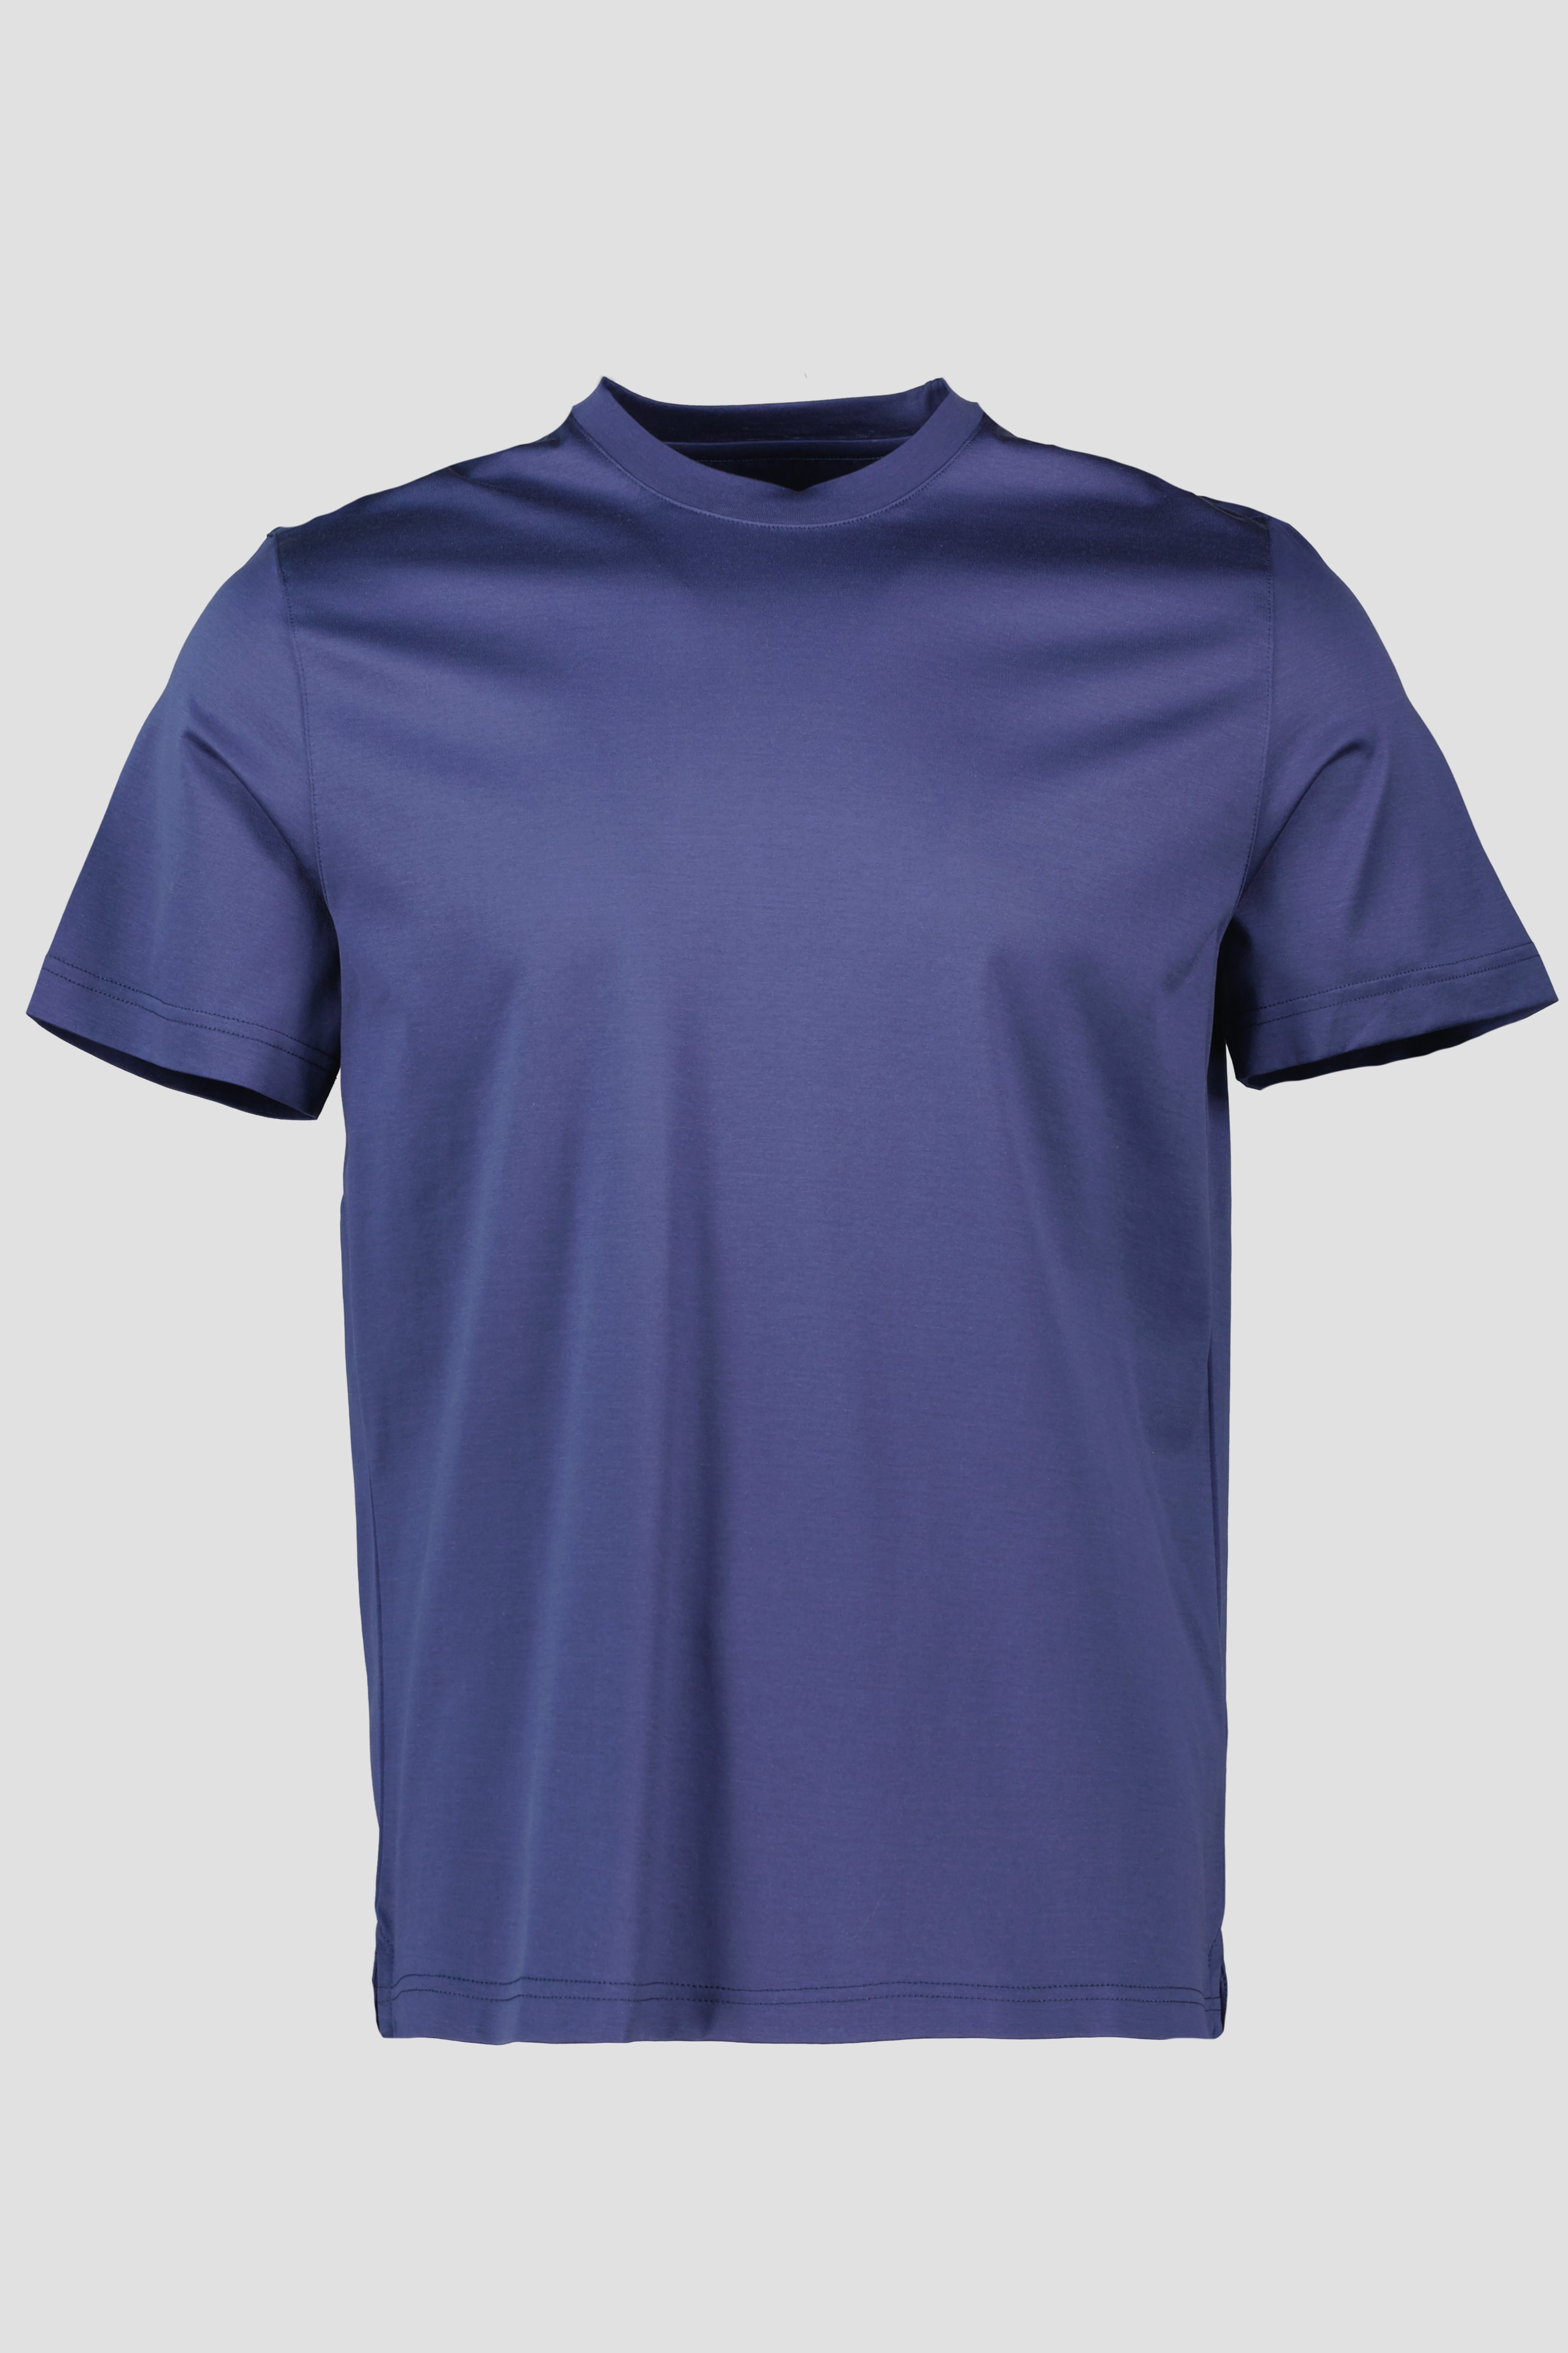 Men's Pal Zileri Dark Blue Mercerised T Shirt